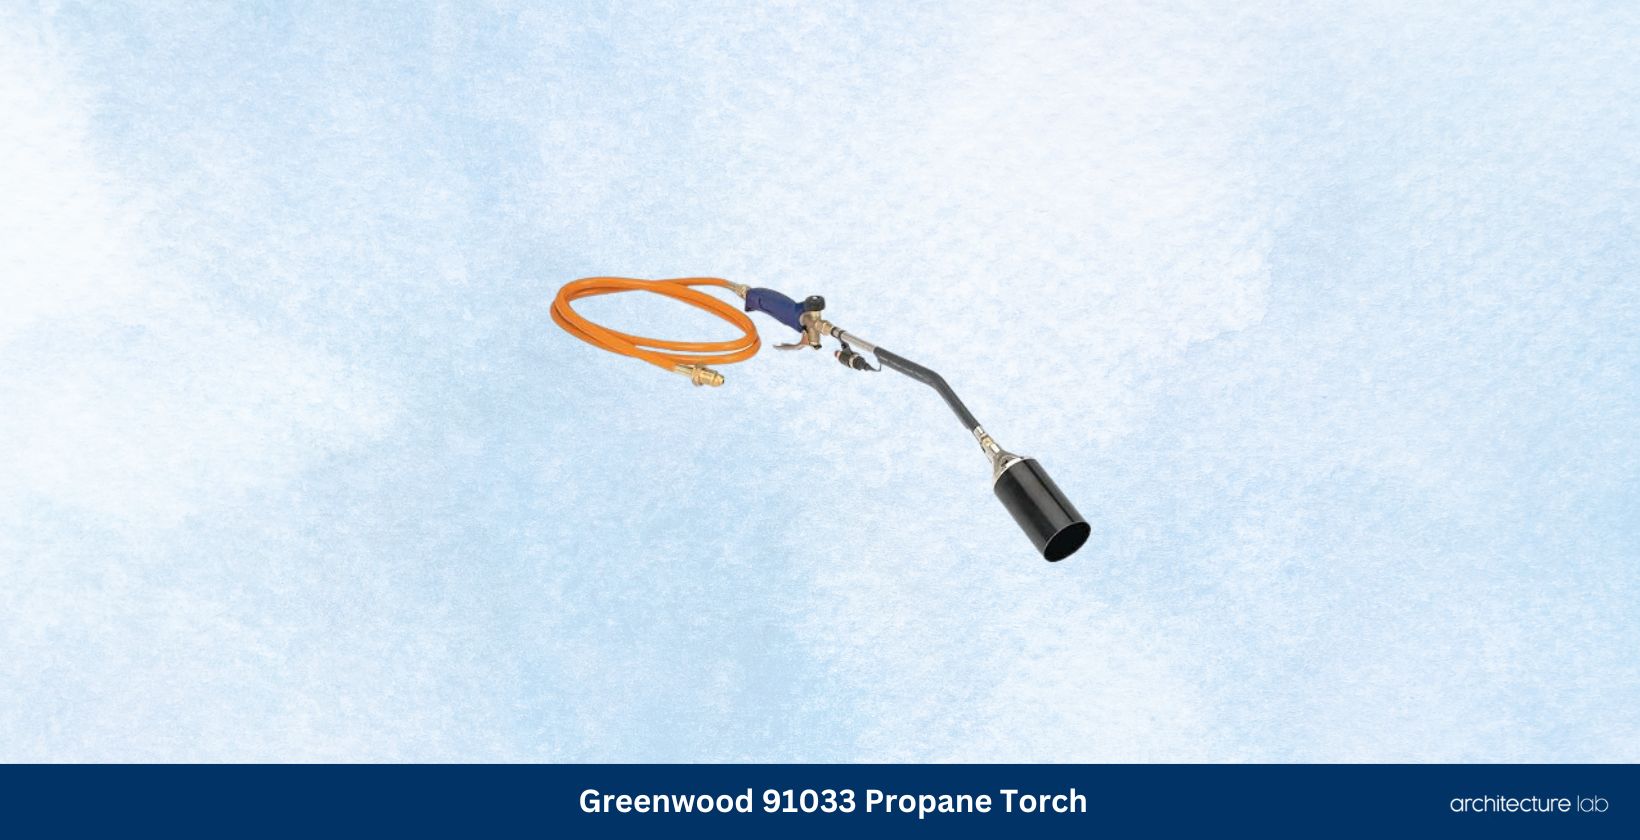 Greenwood 91033 propane torch